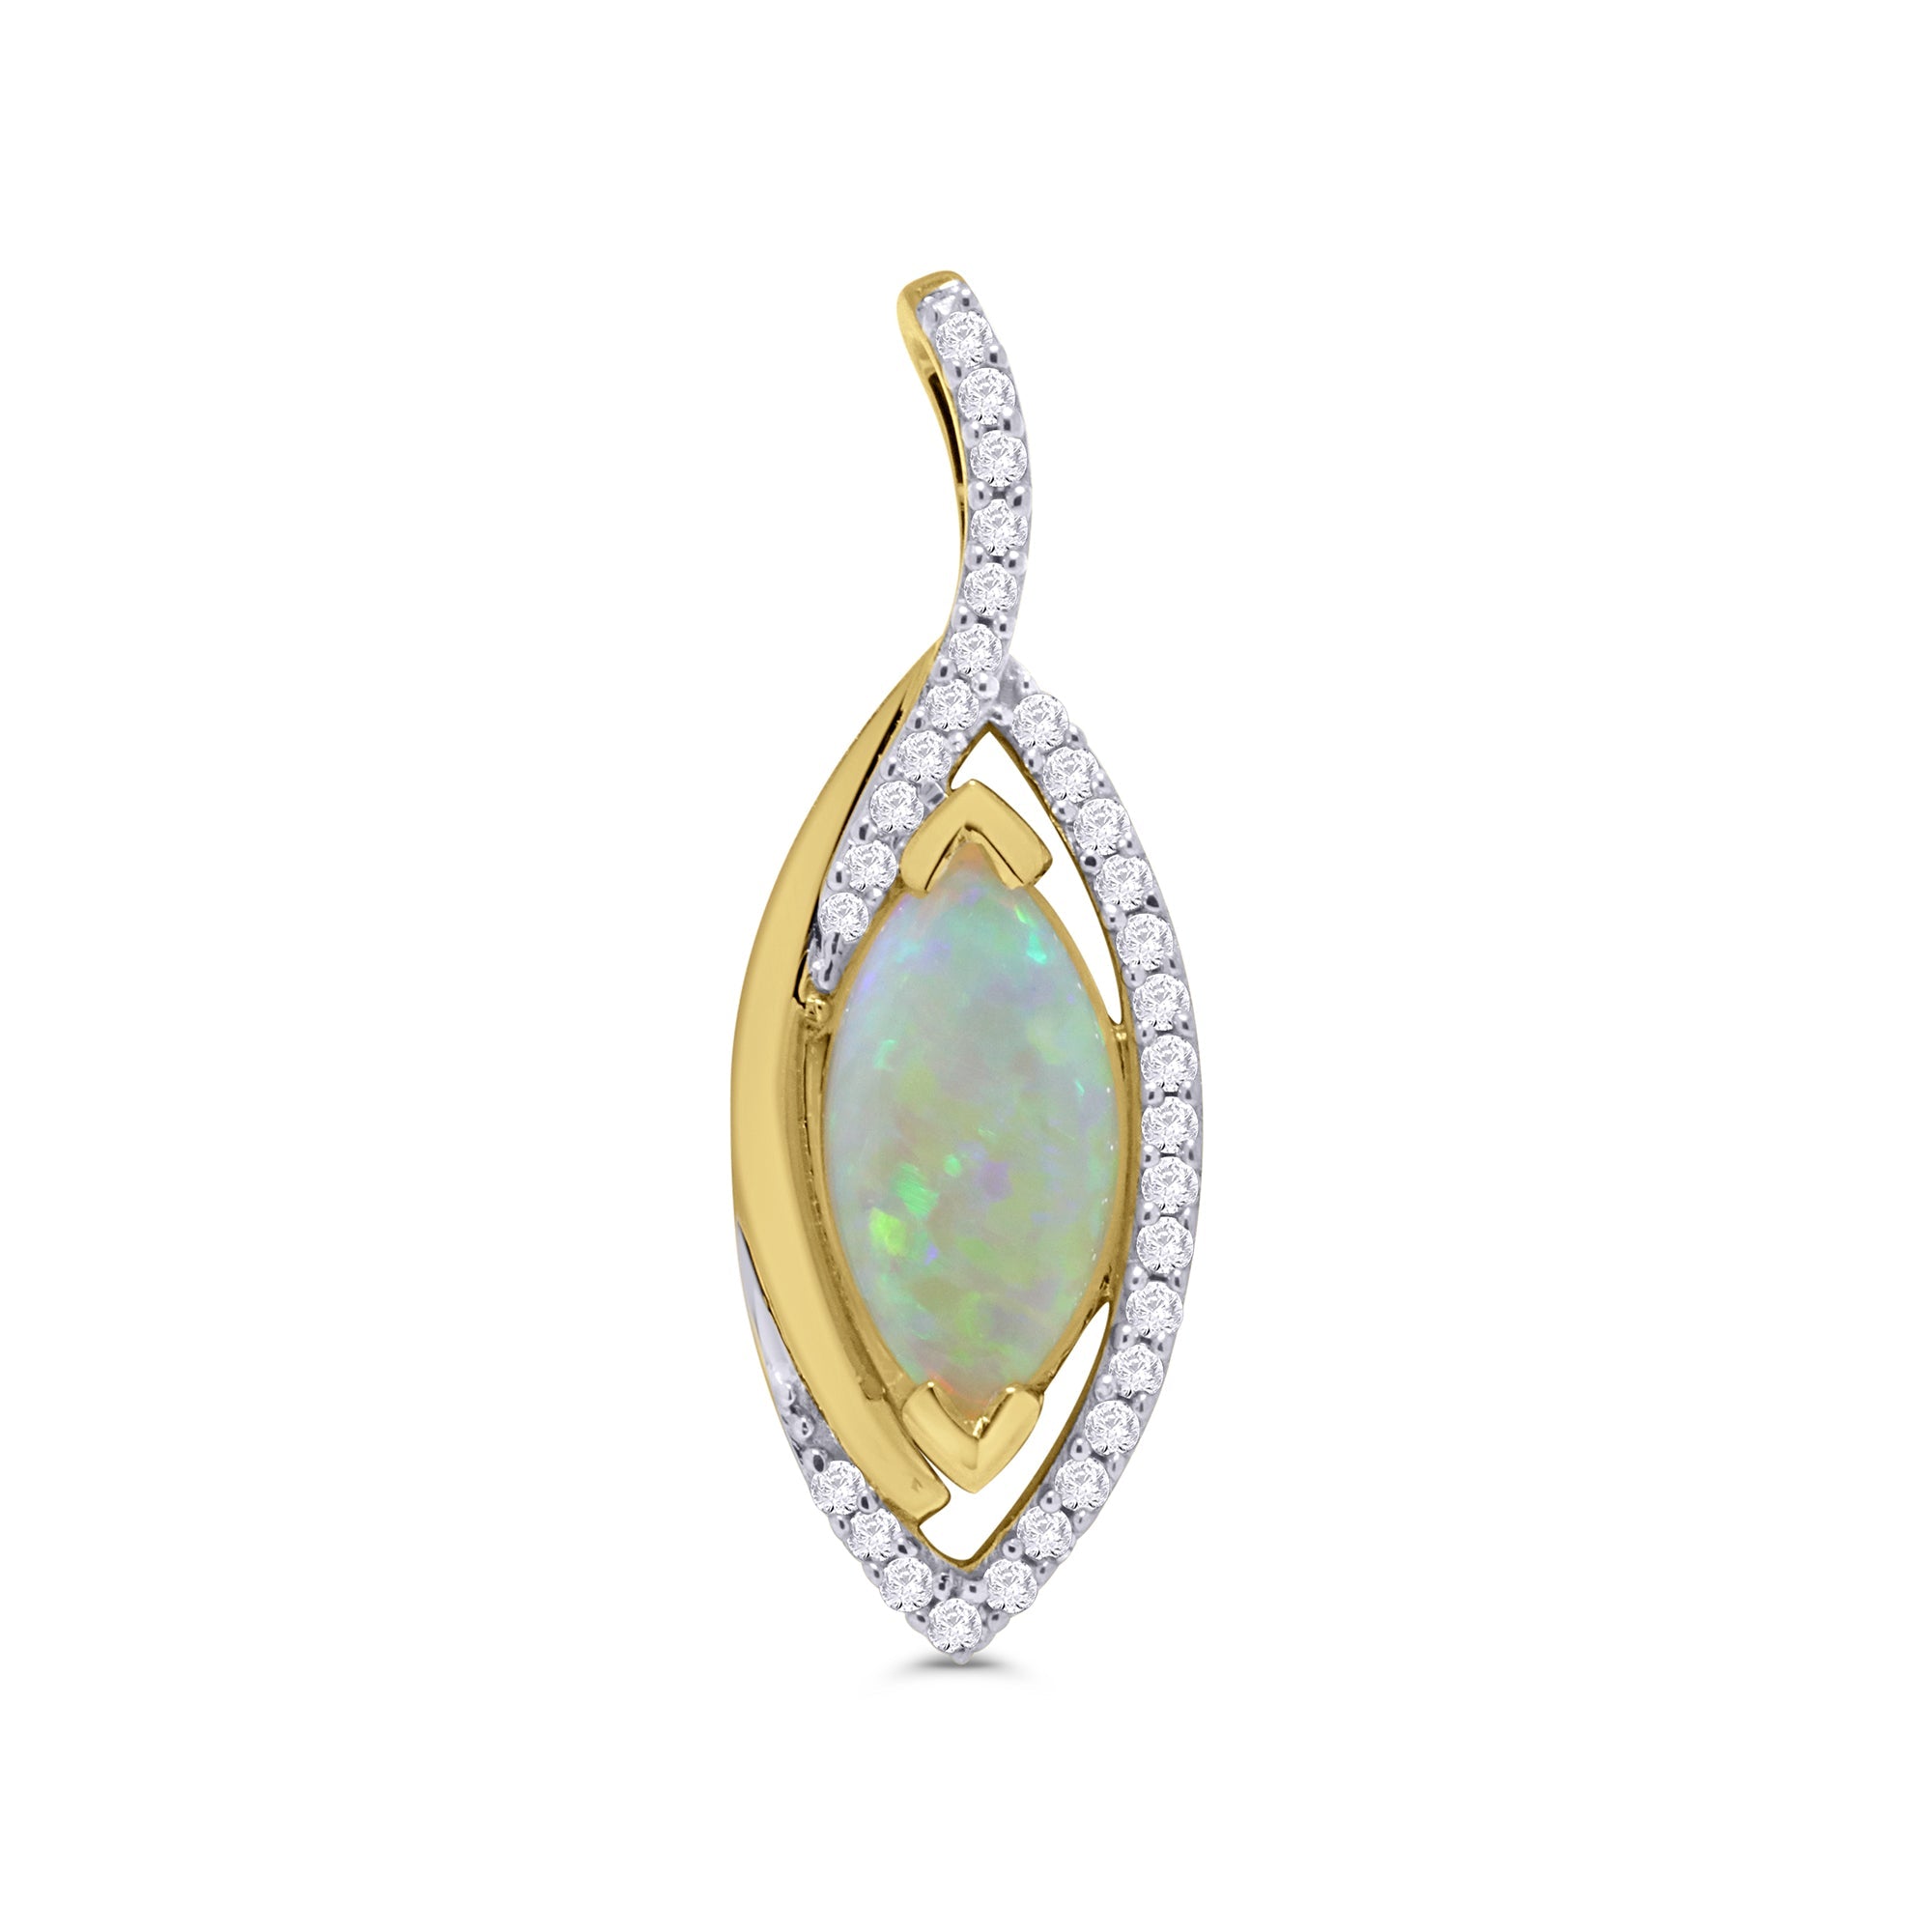 9ct gold 10x5mm marquise shape opal & diamond set pendant 0.12ct